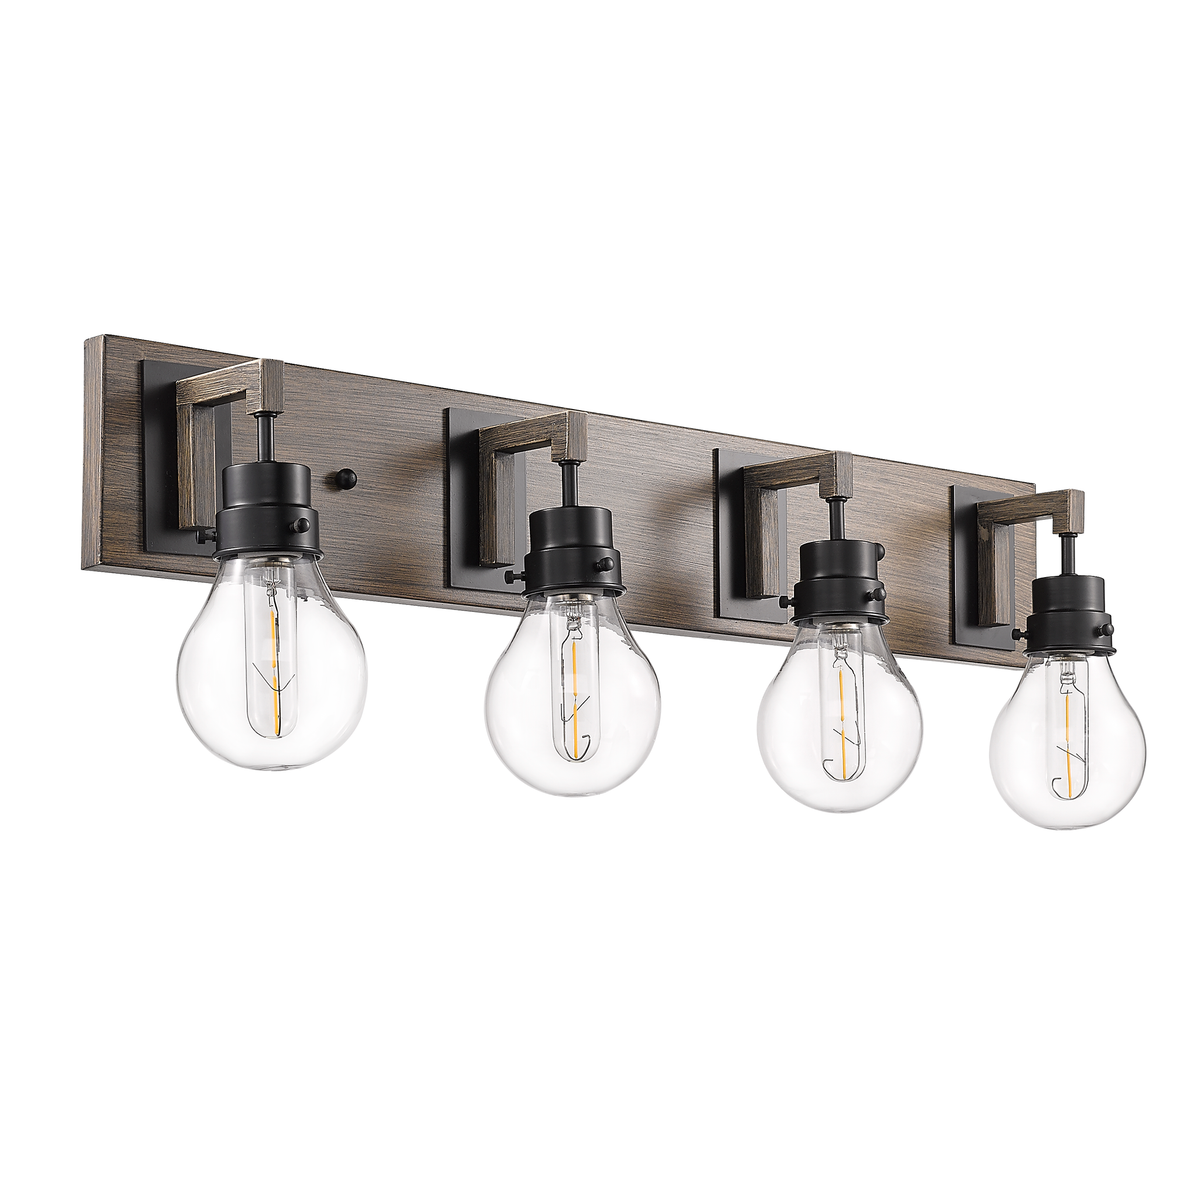 Modern black wooden vanity light fixture with 4 light - Vivio Lighting